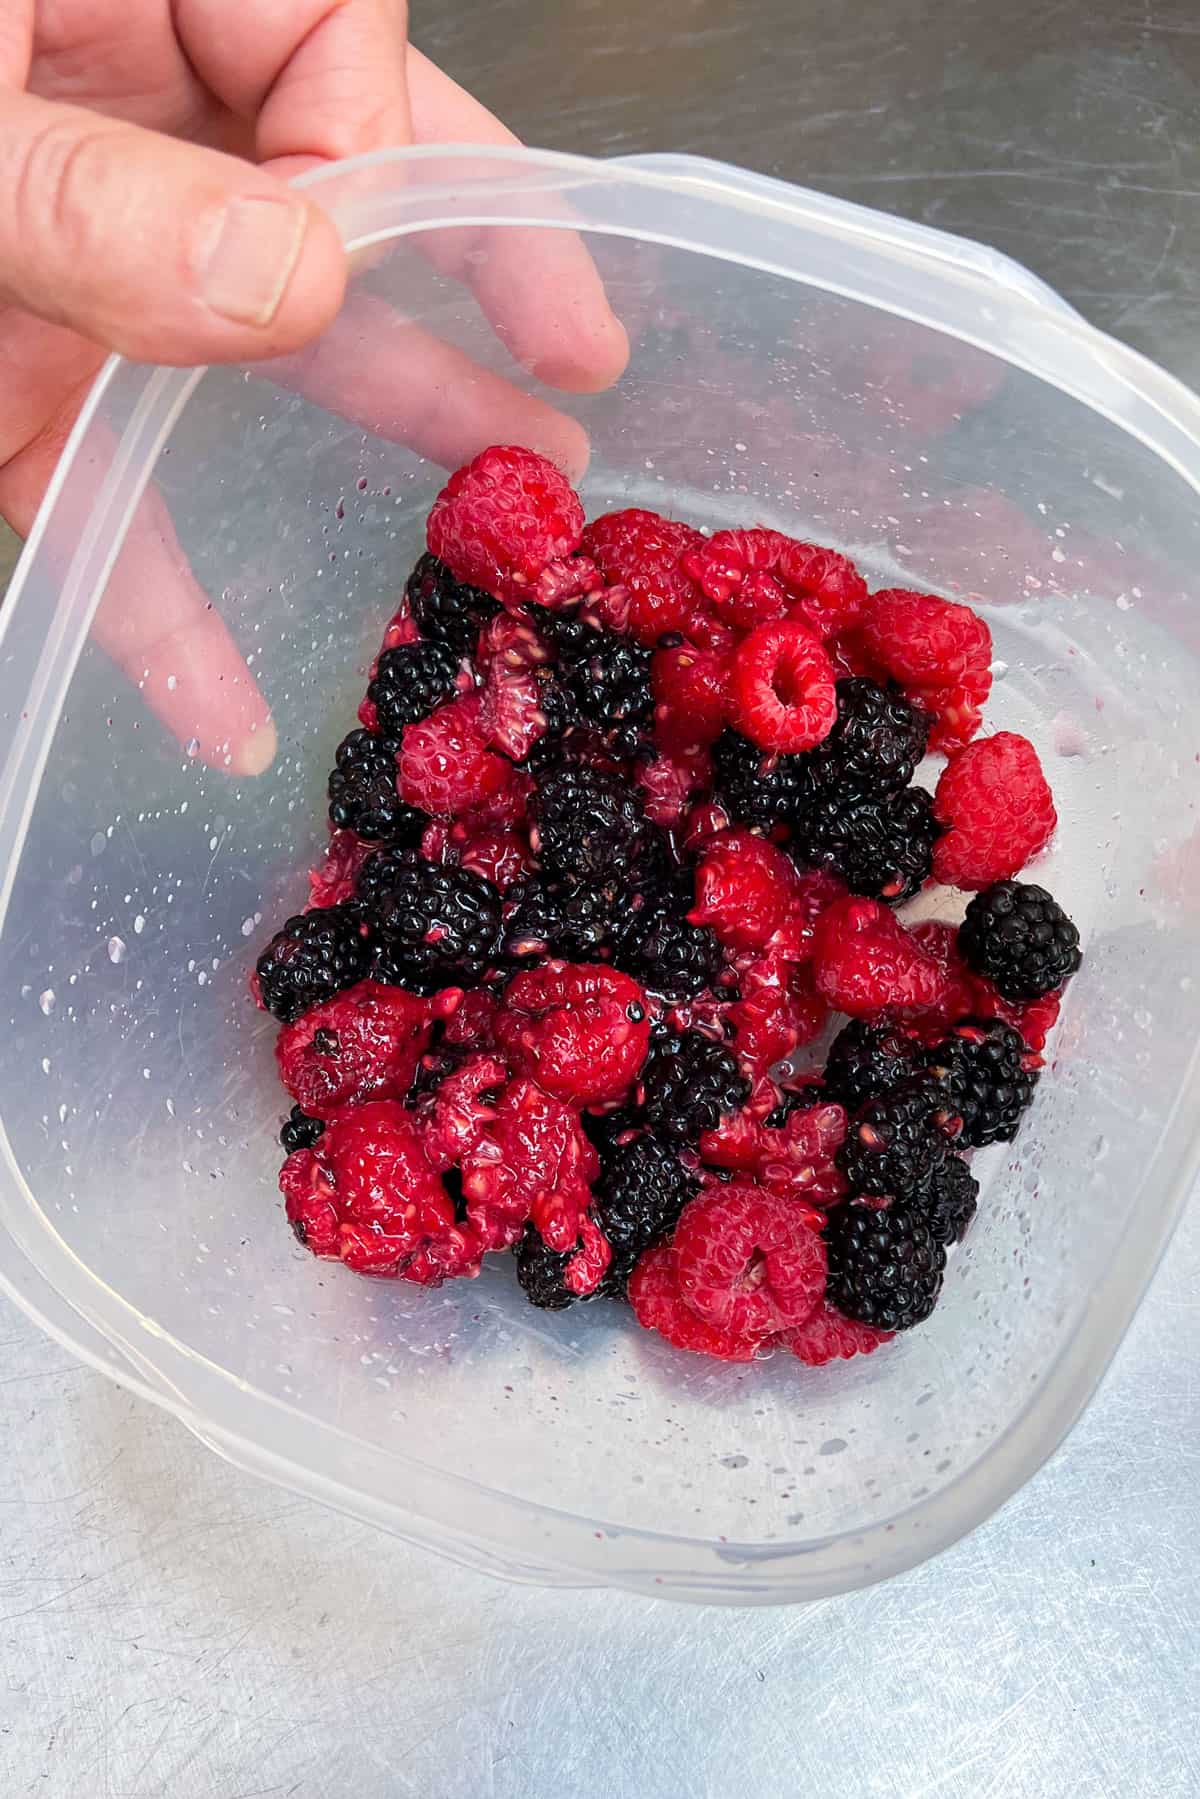 Bruised fresh blackberries and raspberries in a plastic container